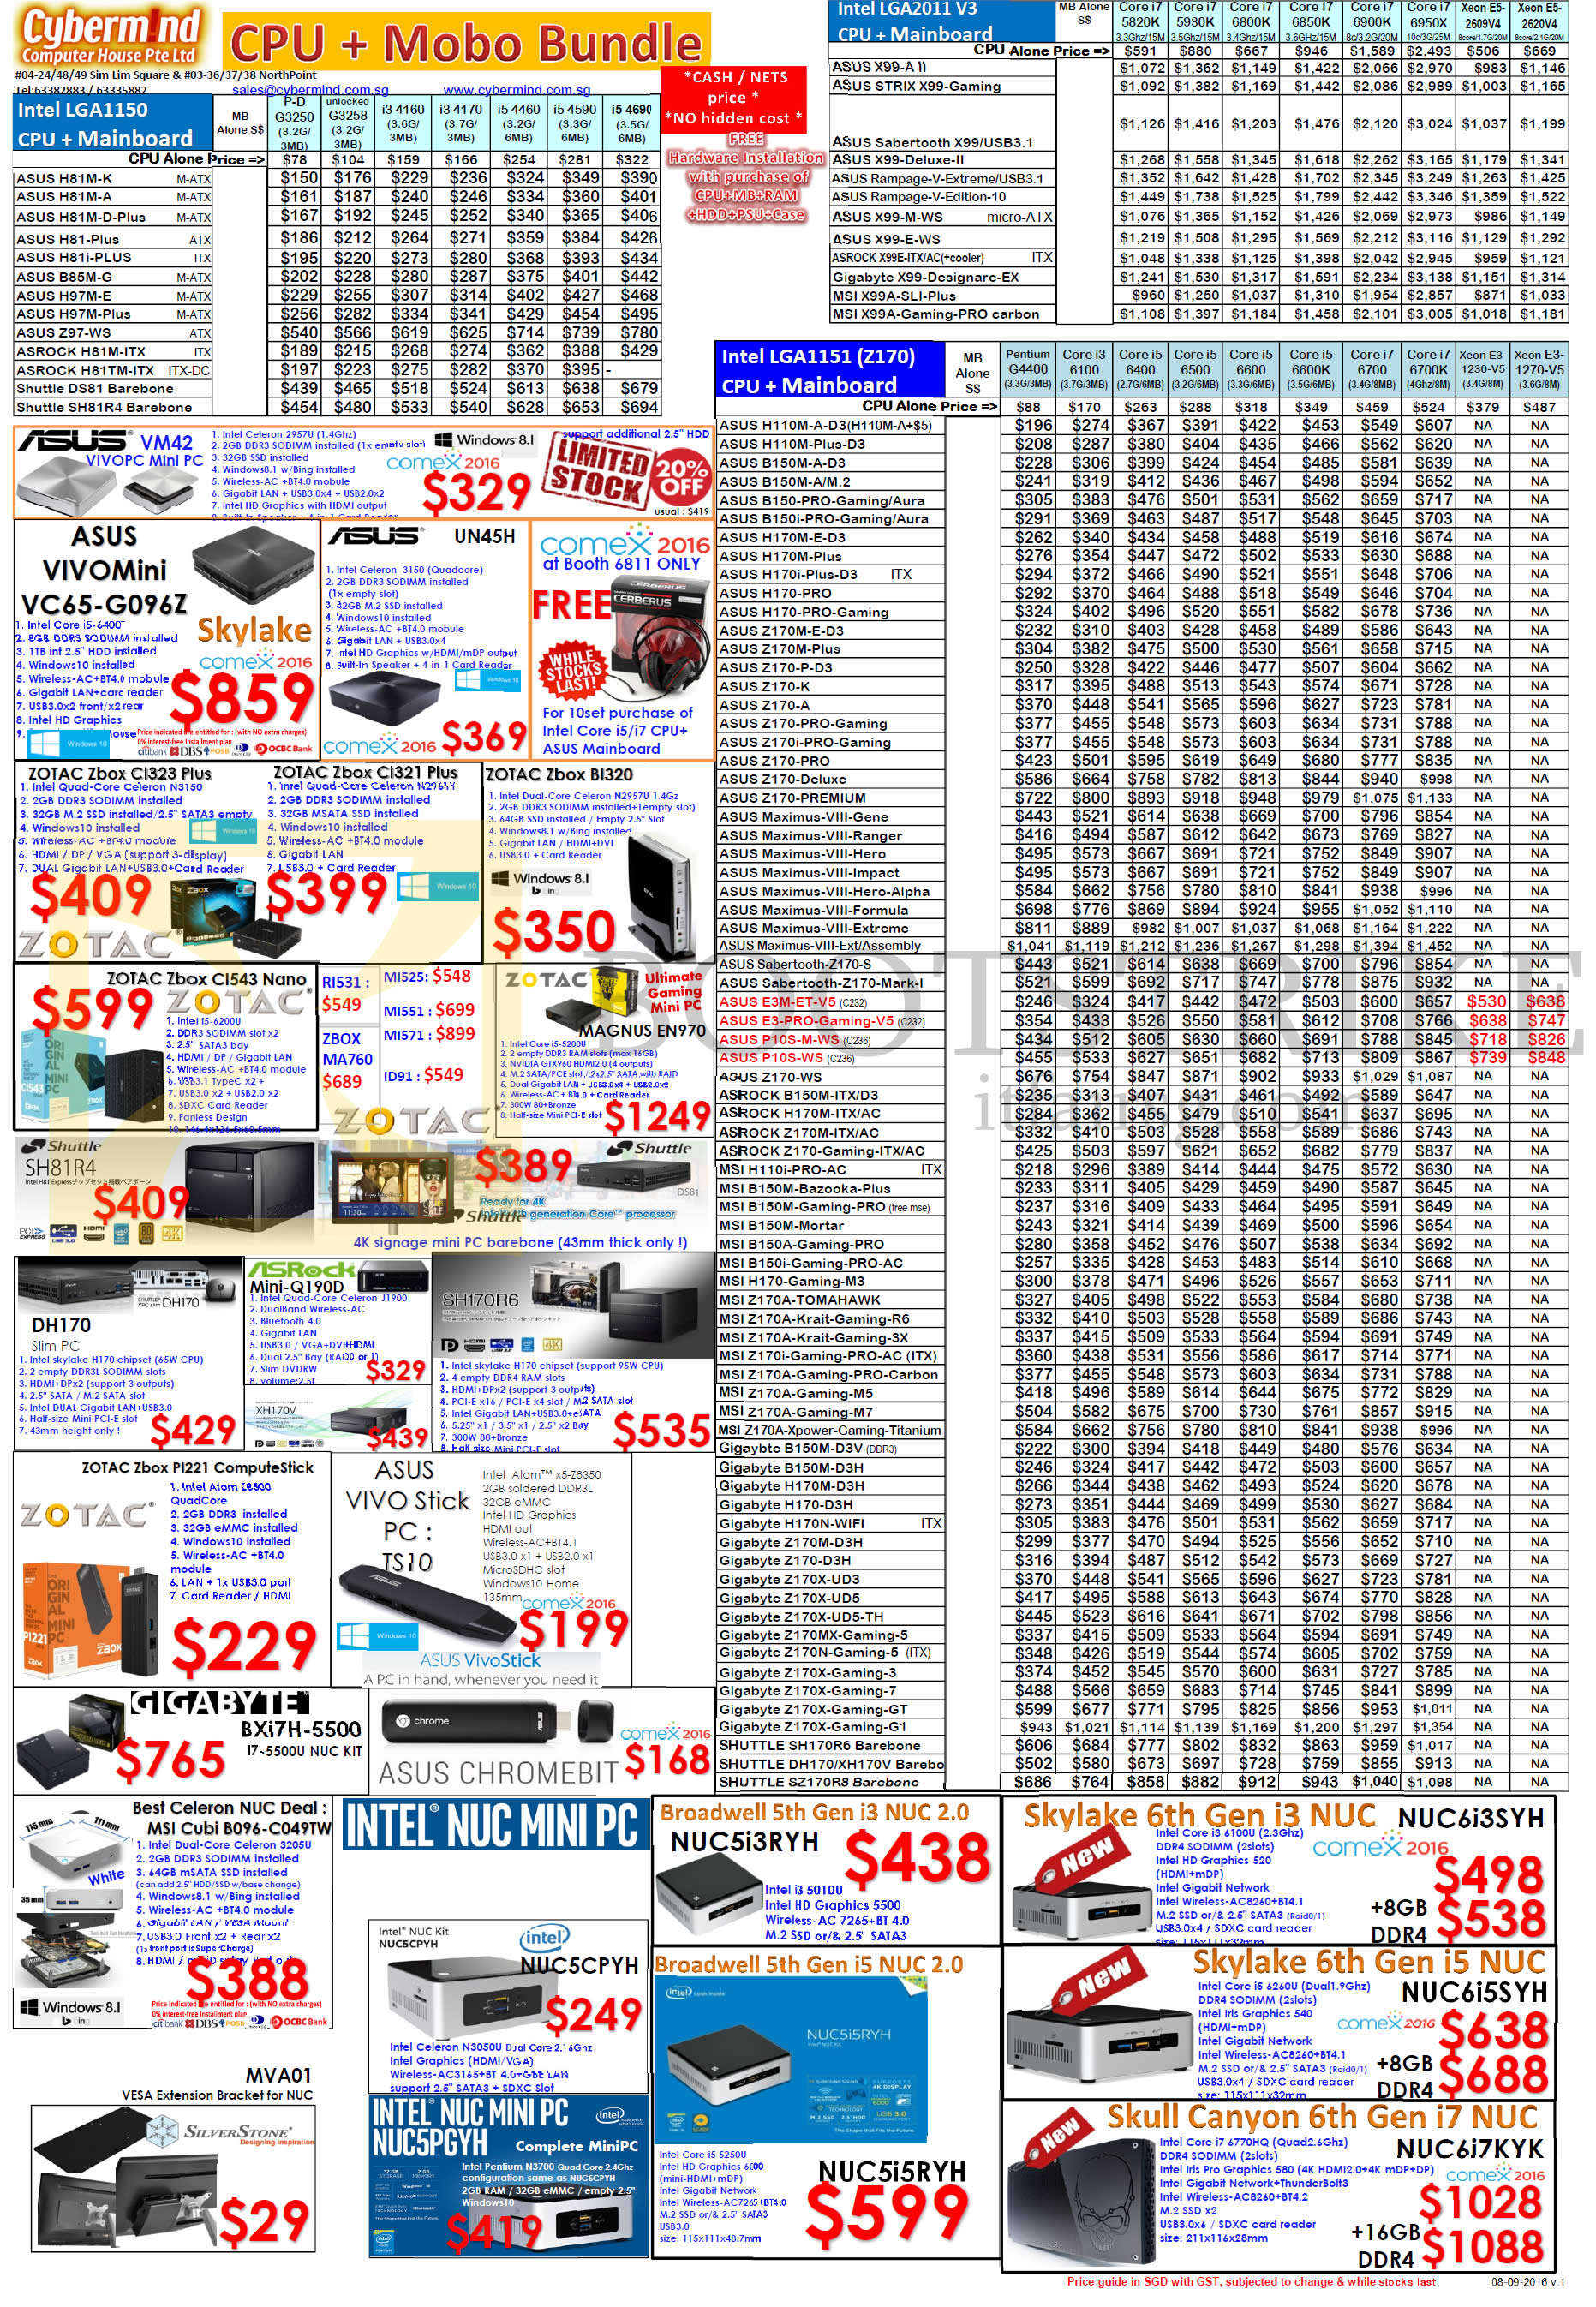 COMEX 2016 price list image brochure of Cybermind CPU N Mobo Bundle, Mini PC, Motherboards, CPUs, Desktop PCs, Asus, Zotac, Gigabyte